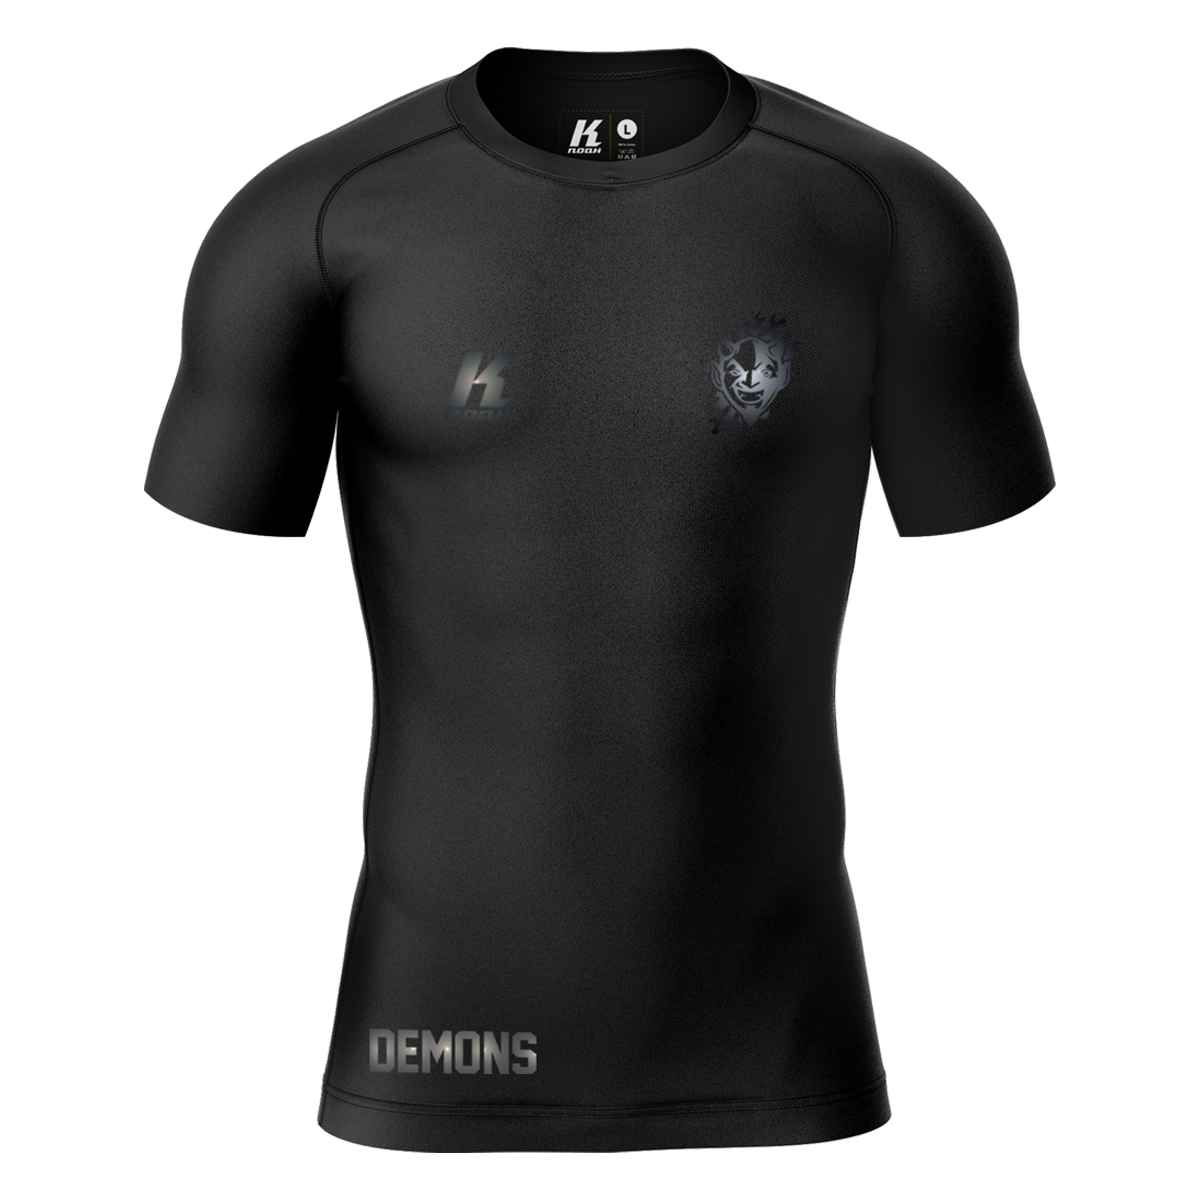 Demons "Blackline" K.Tech Compression Shortsleeve Shirt